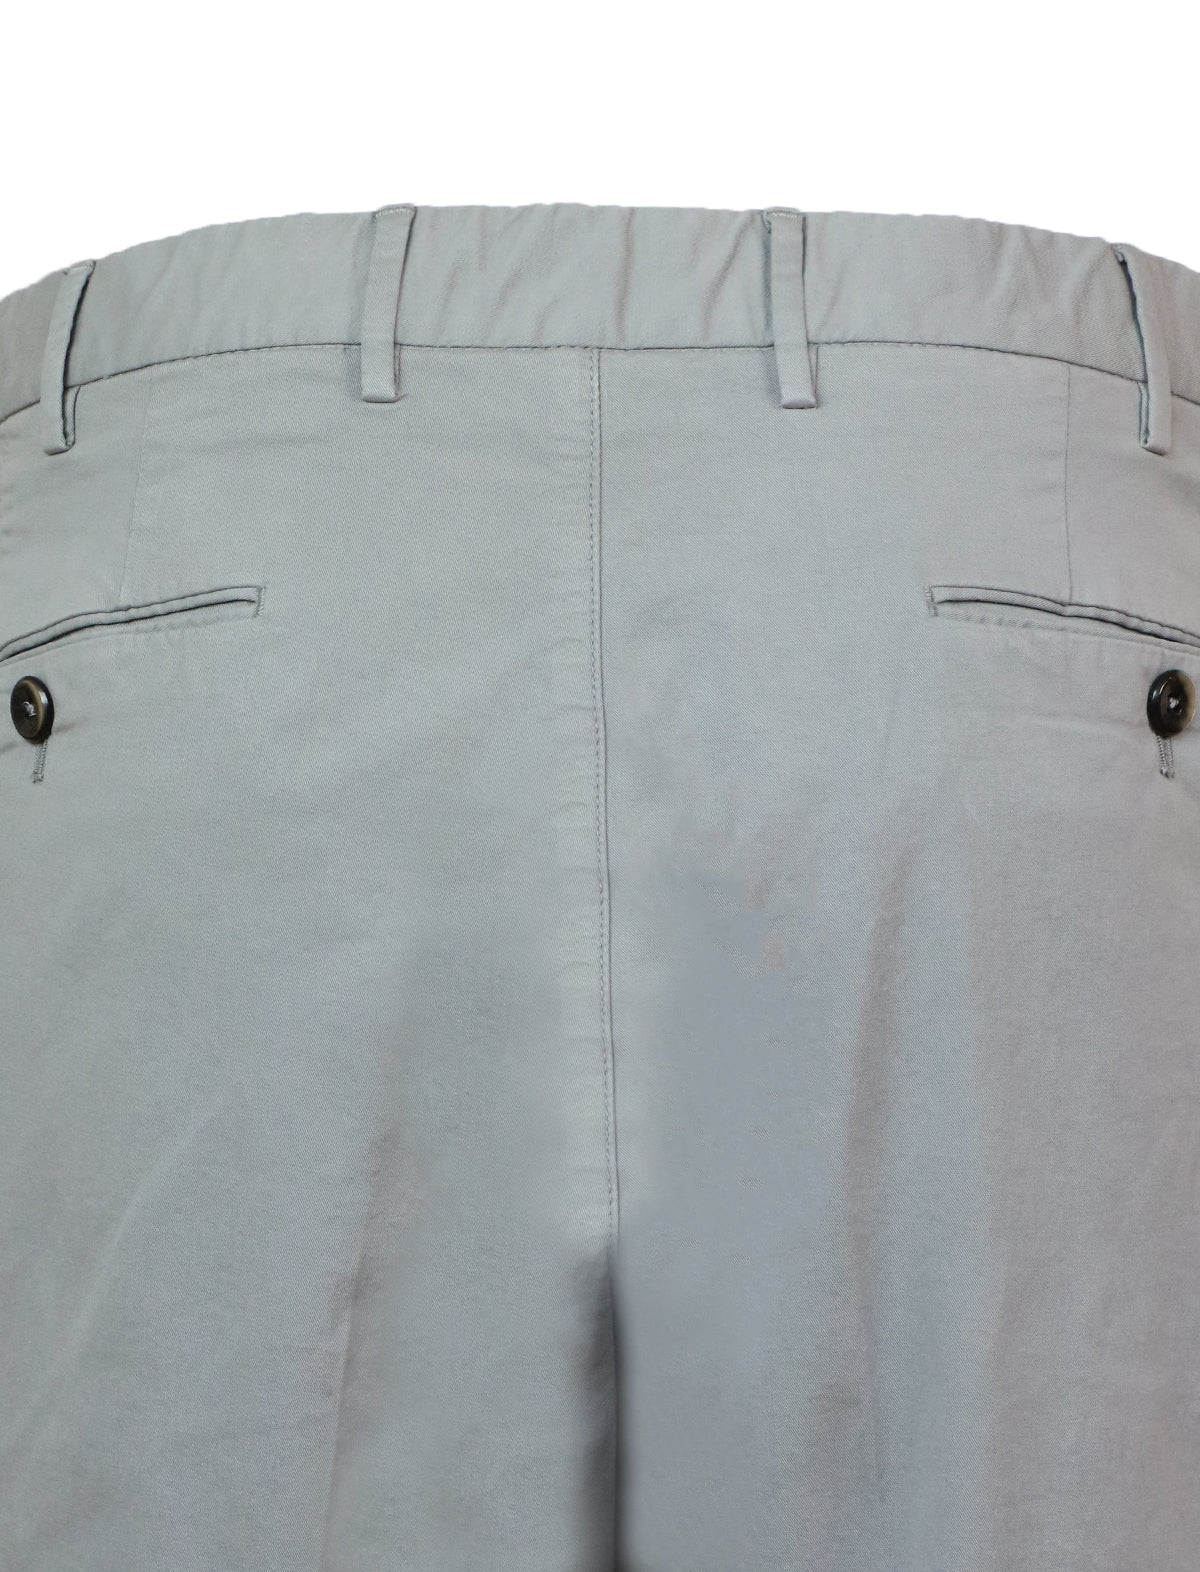 PT TORINO Bermuda Shorts in Grey